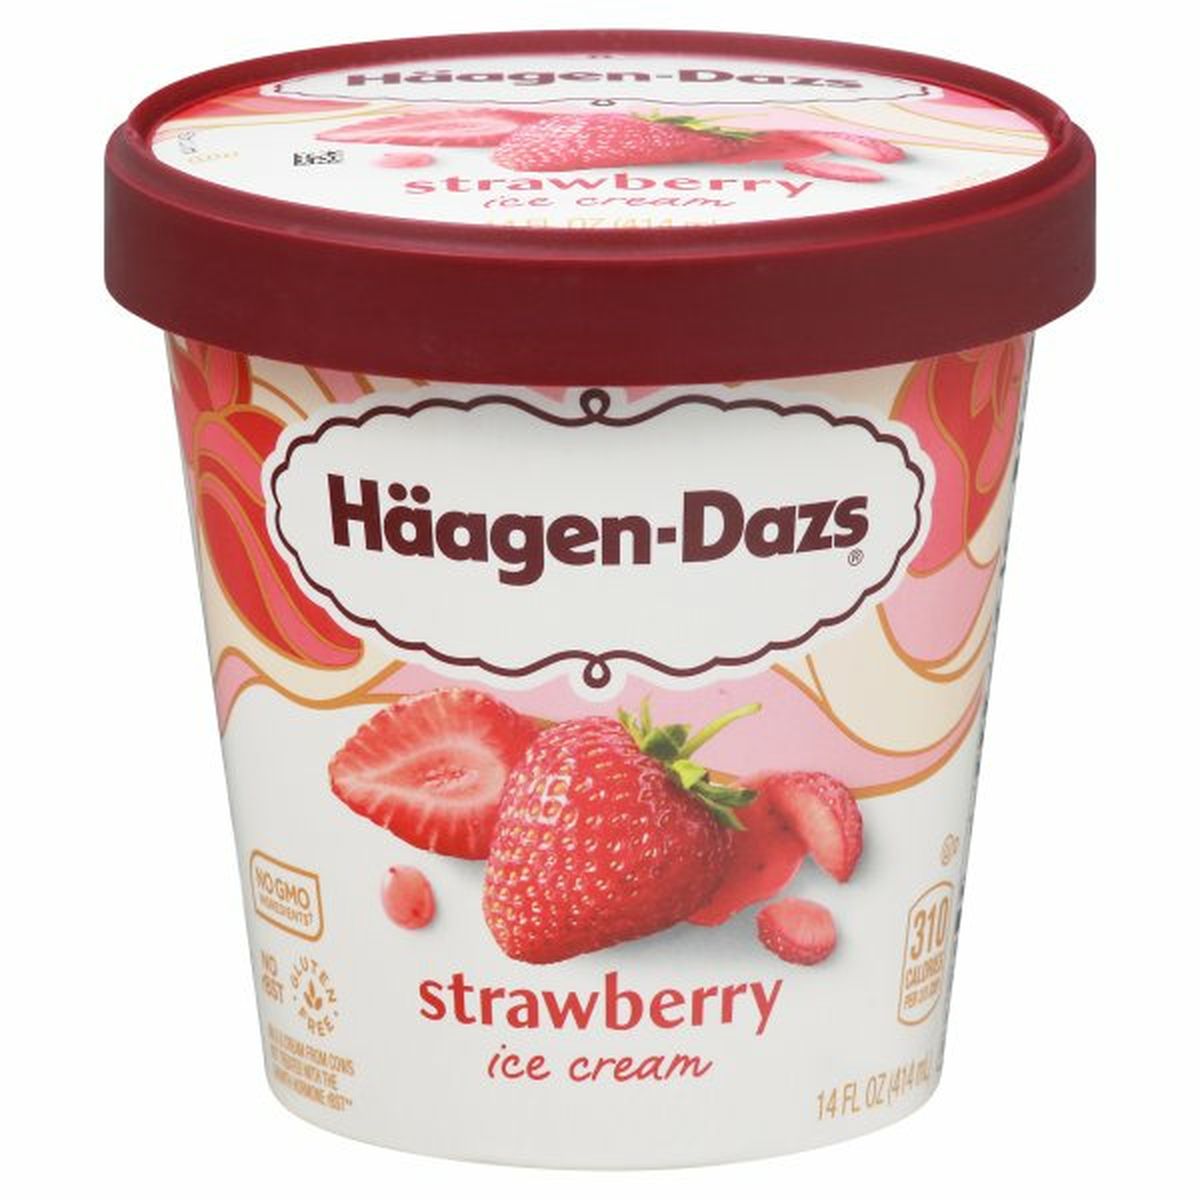 Calories in Haagen-Dazs Ice Cream, Strawberry